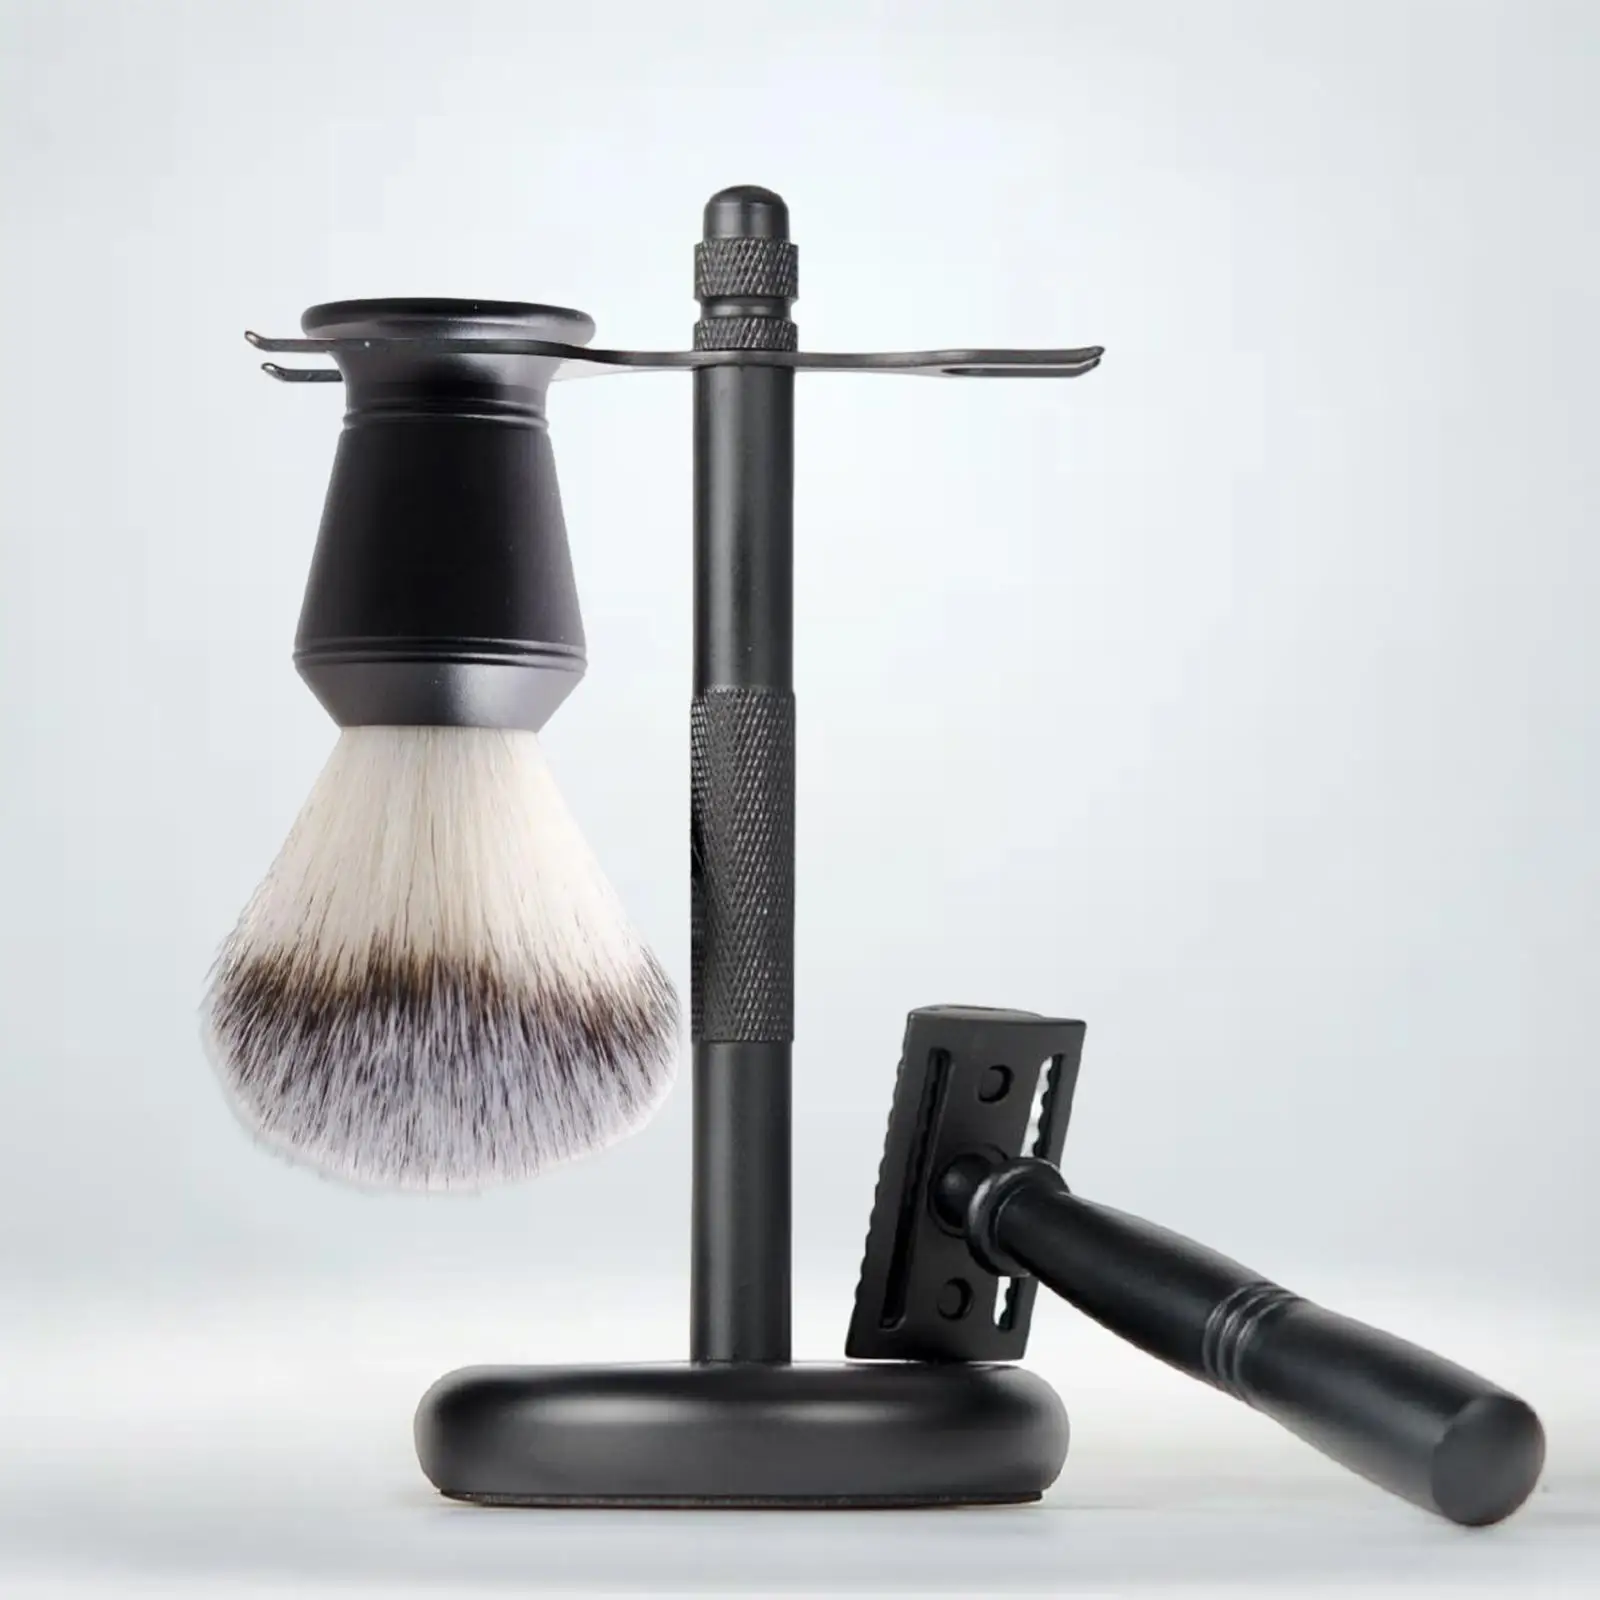 3 Pieces Shaving Kit Black Razor Shaving Kit Includes Edge Razor, Holder, Shaving Brush for Dad Boyfriend Shave Accessory